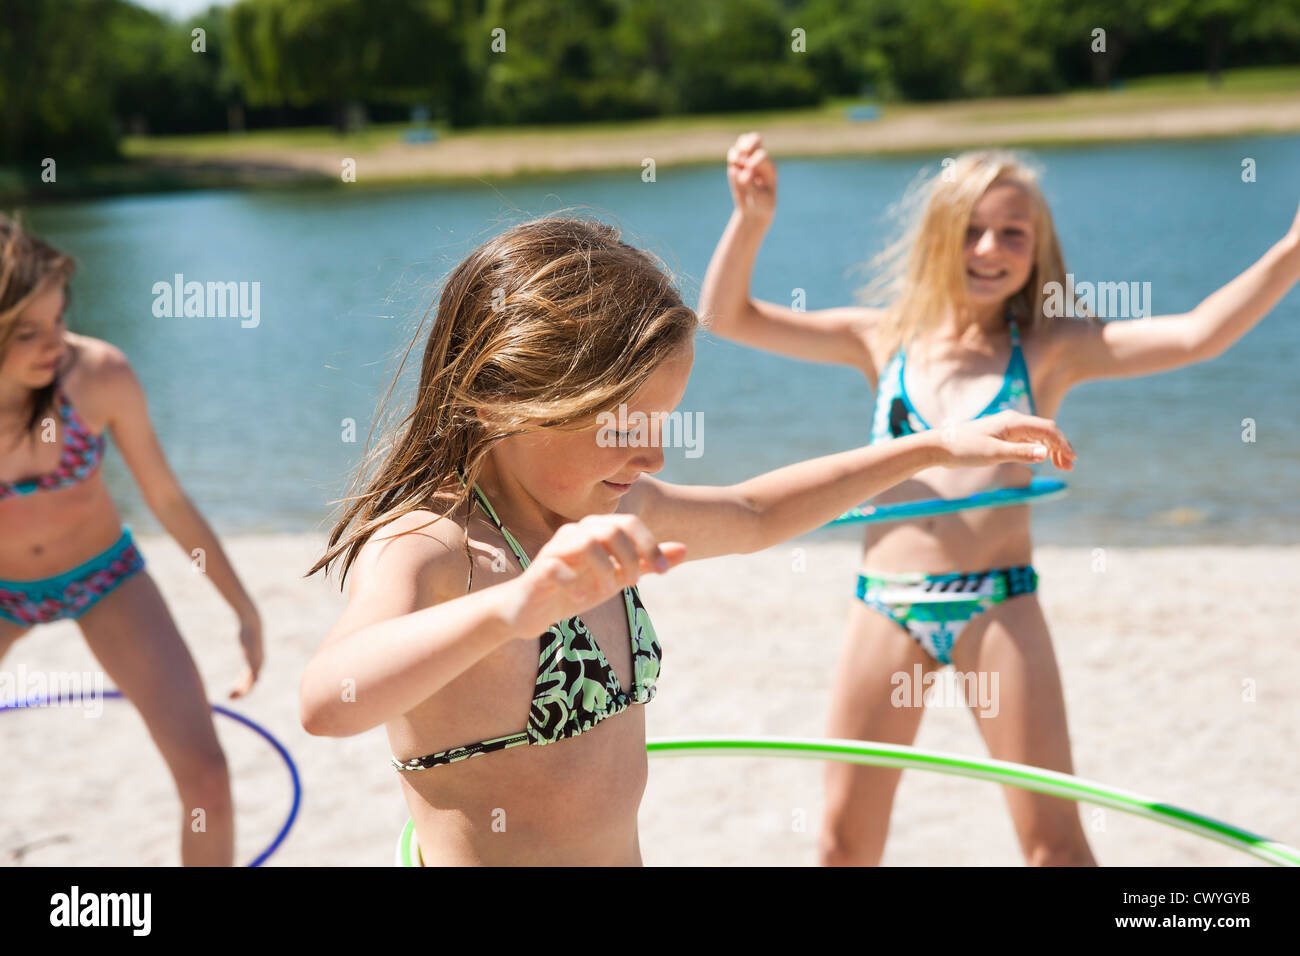 Drei Mädchen In Bikinis Mit Hula Hoops Am Badesee Stockfotografie Alamy 